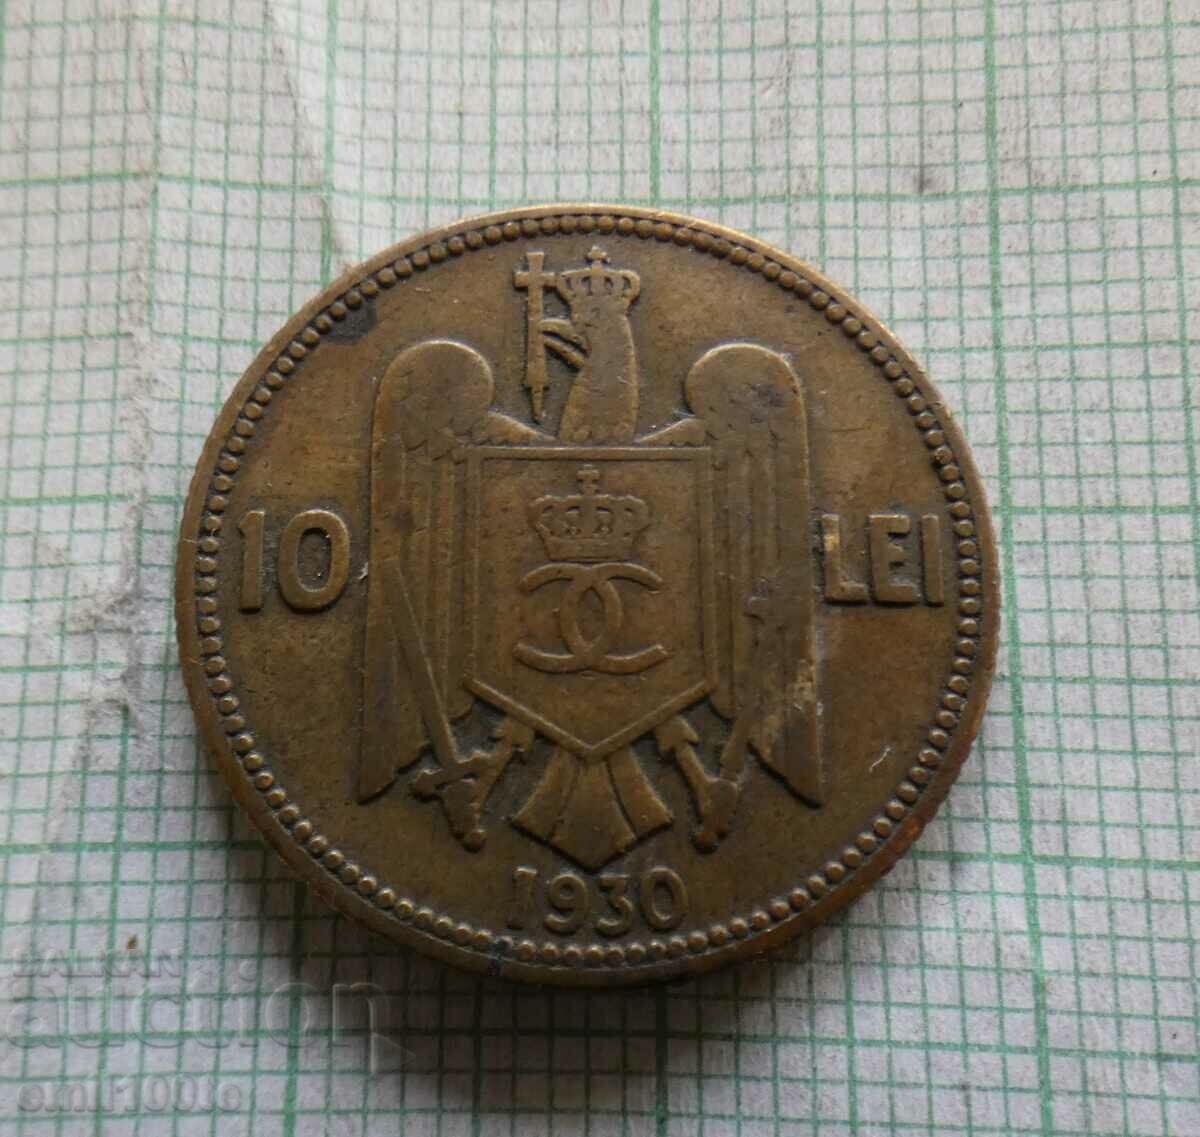 10 lei 1930 Ρουμανία